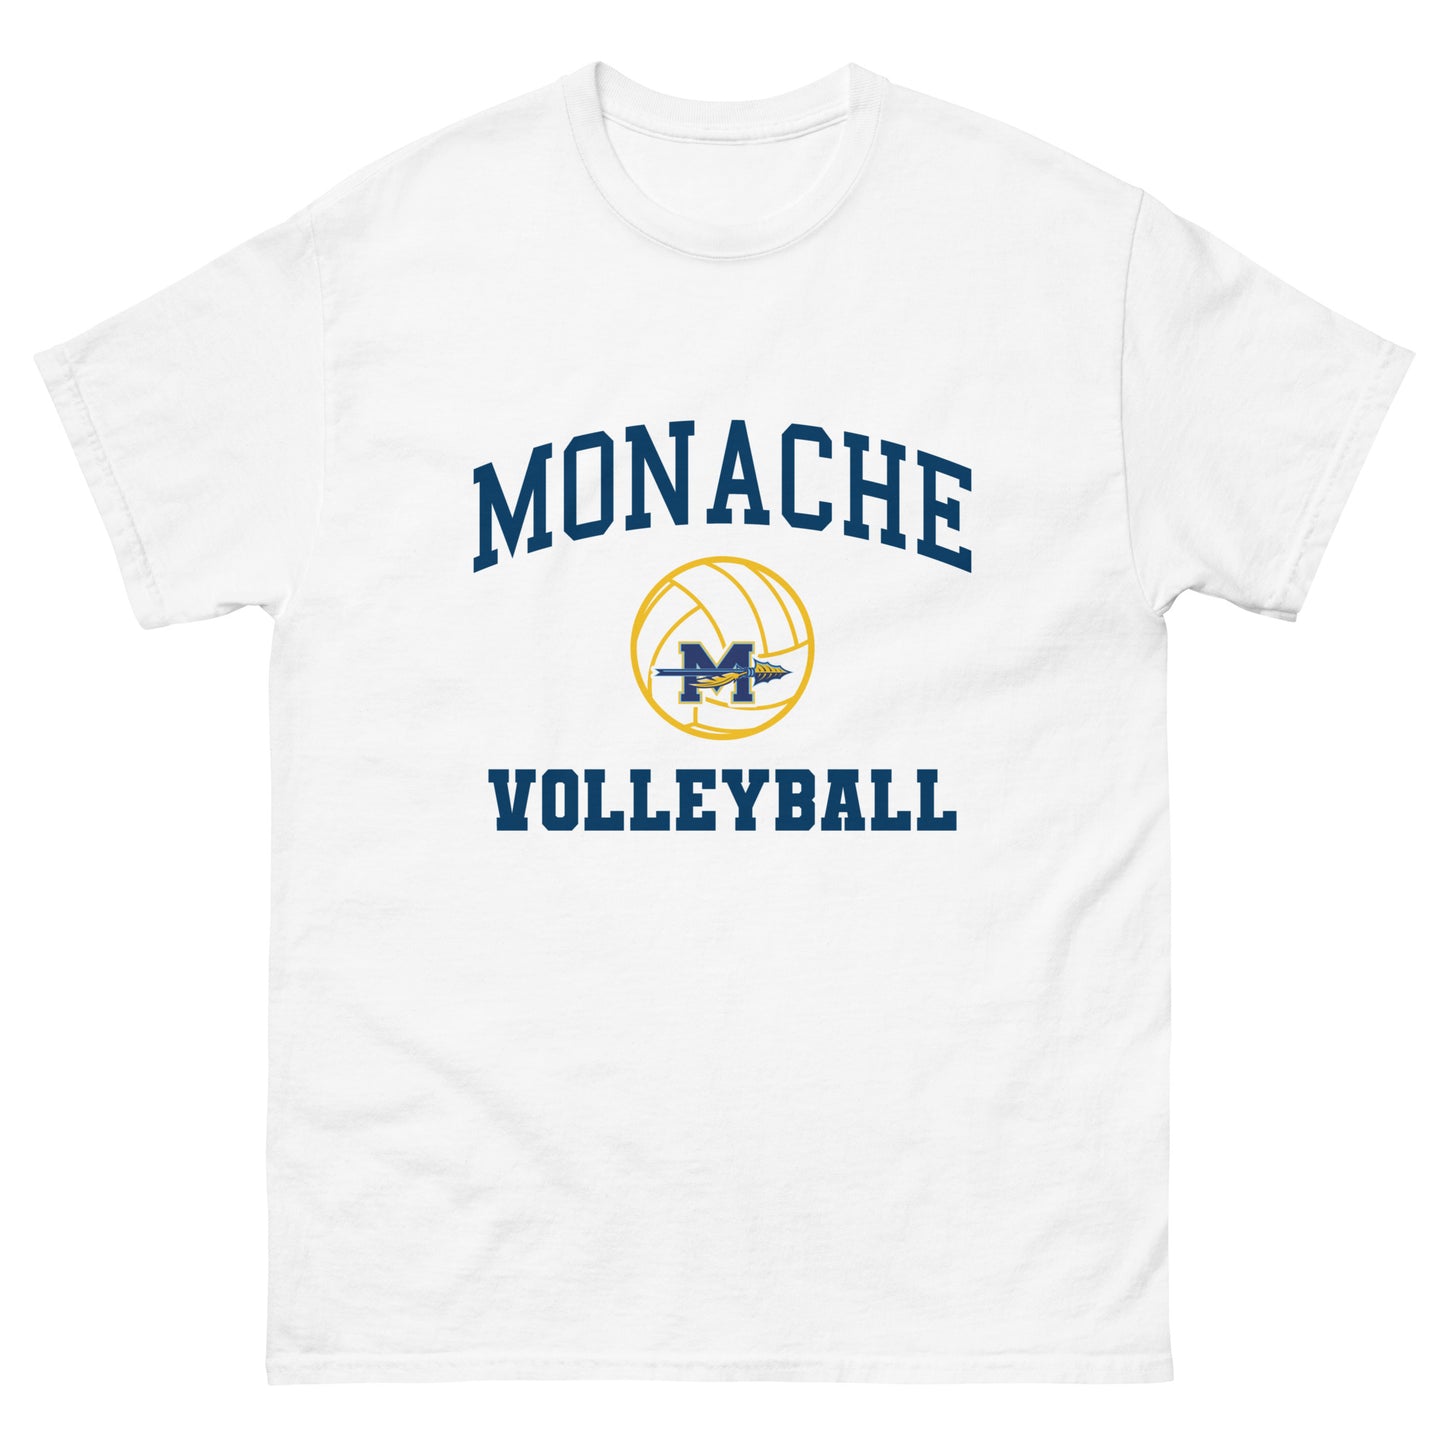 Monache Volleyball classic tee